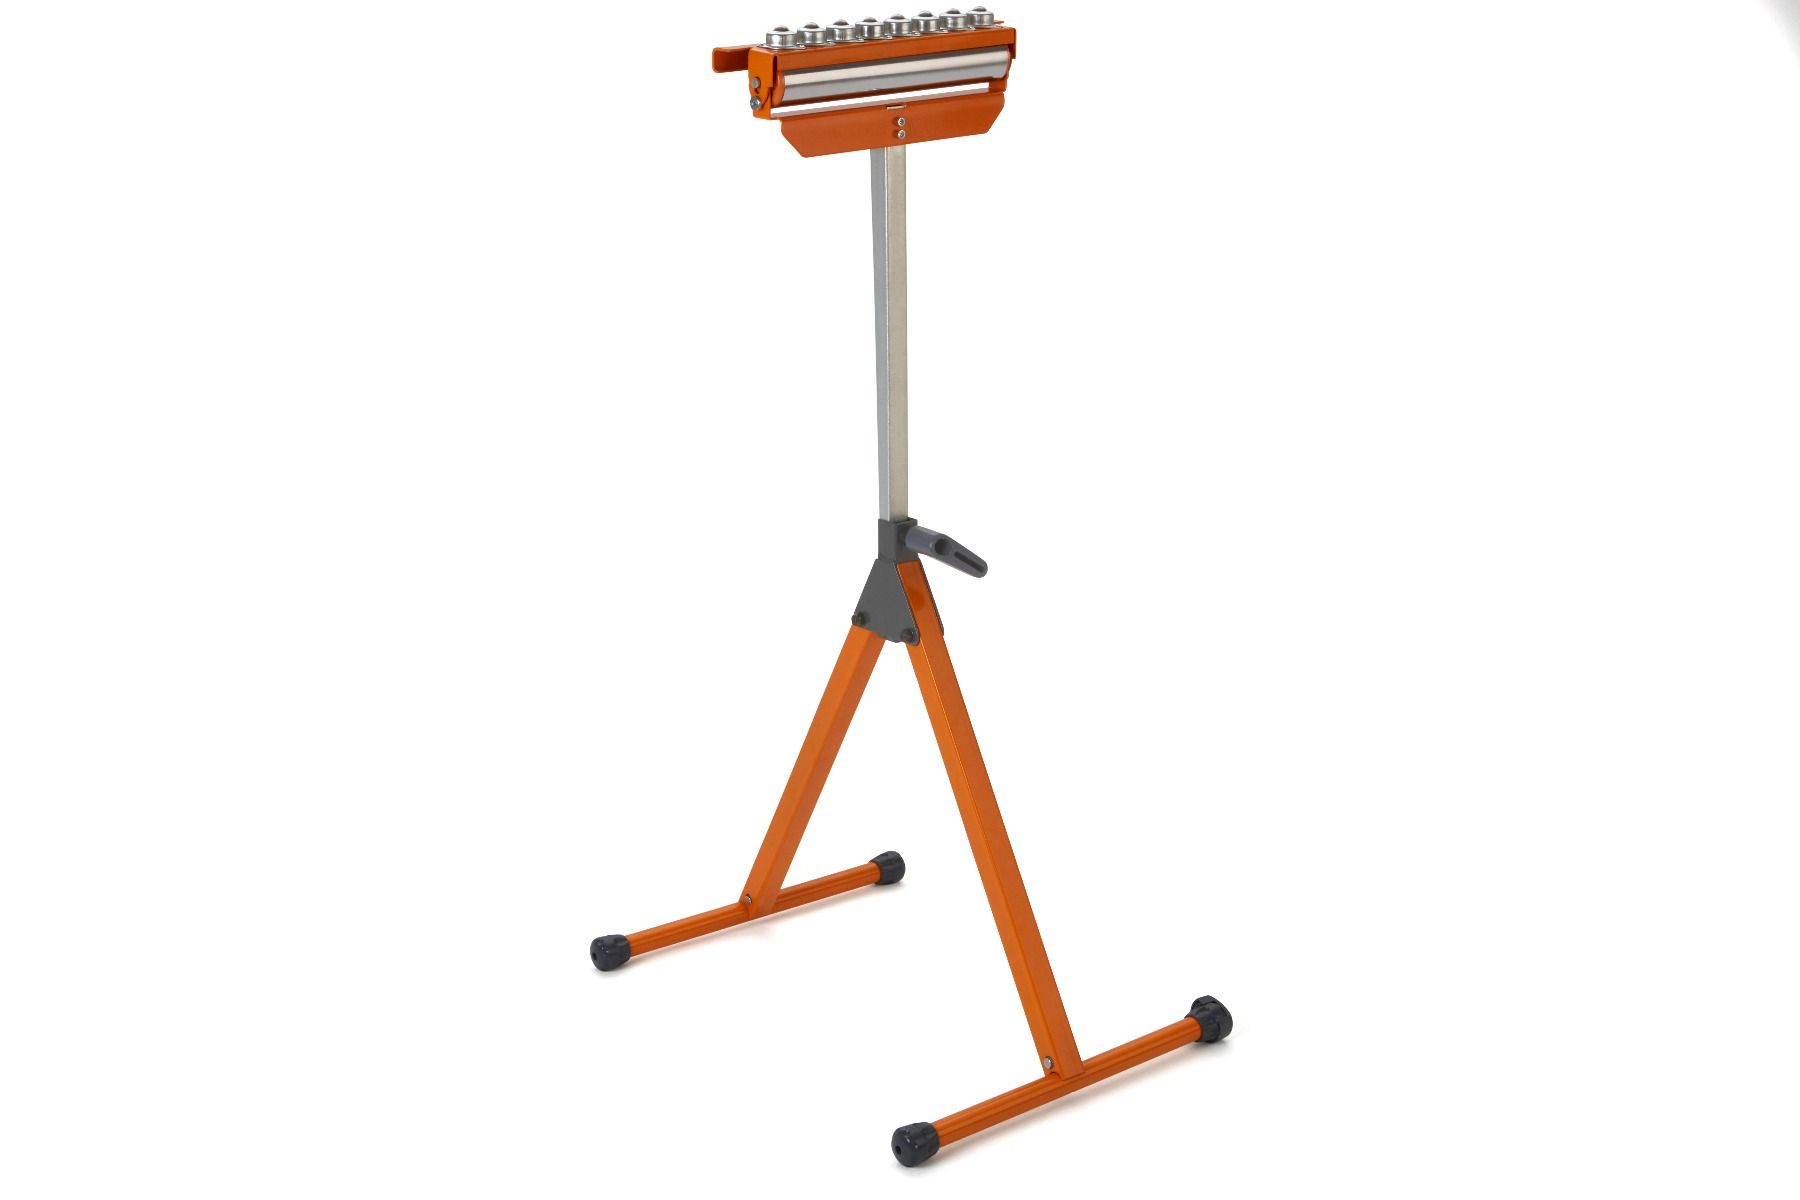 BORA Portamate PM-5093 Tri Function Pedestal Roller - Amazon $35.39